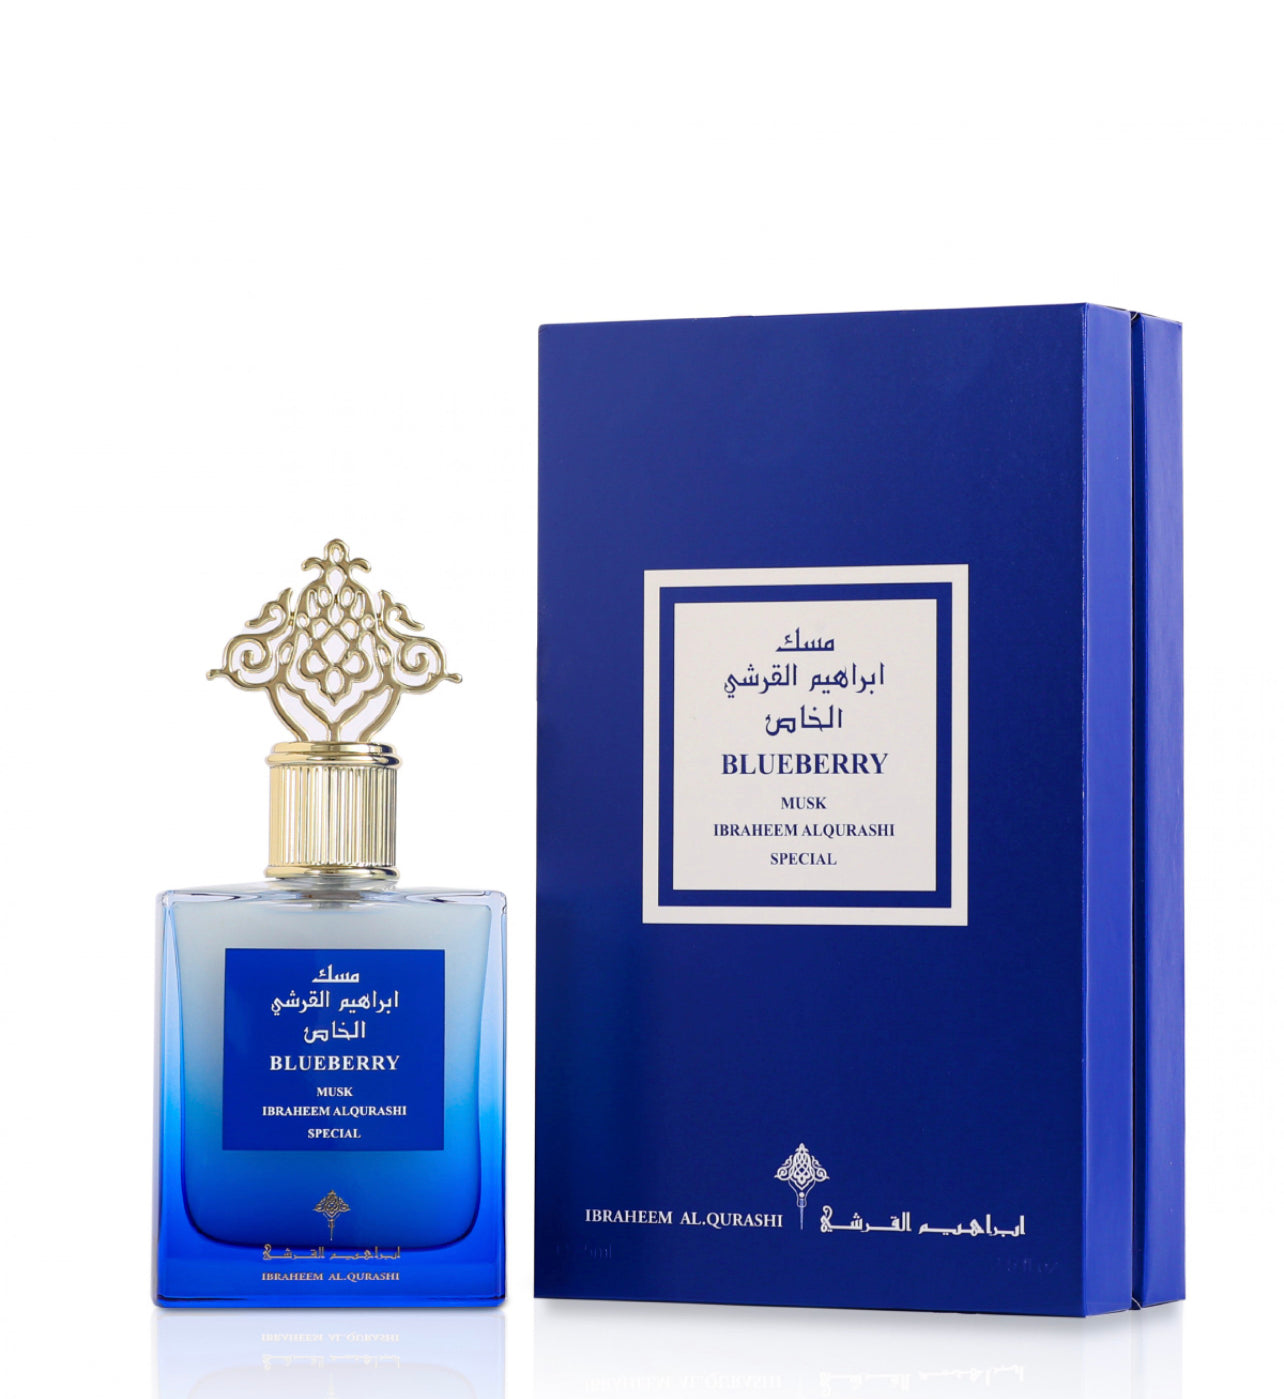 Ibraheem Alqurashi Musk Blueberry Eau de Parfum - 75ml